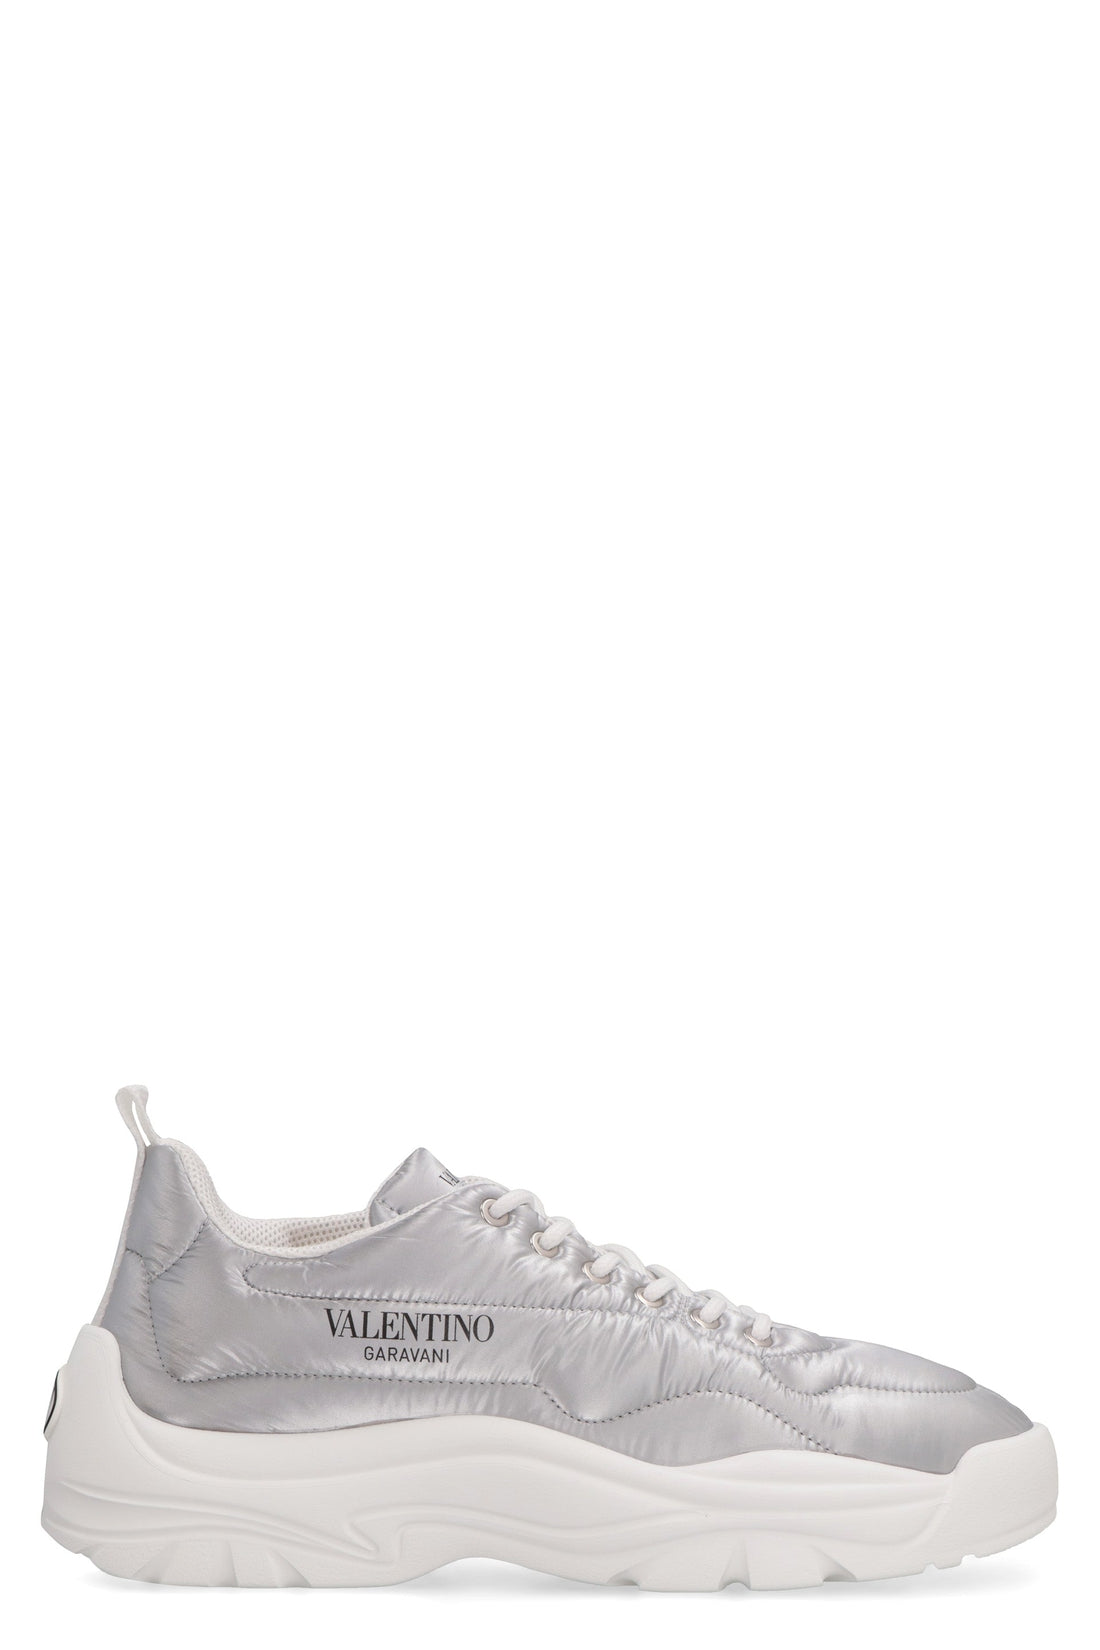 Valentino-OUTLET-SALE-Valentino Garavani - Gumboy low-top sneakers-ARCHIVIST